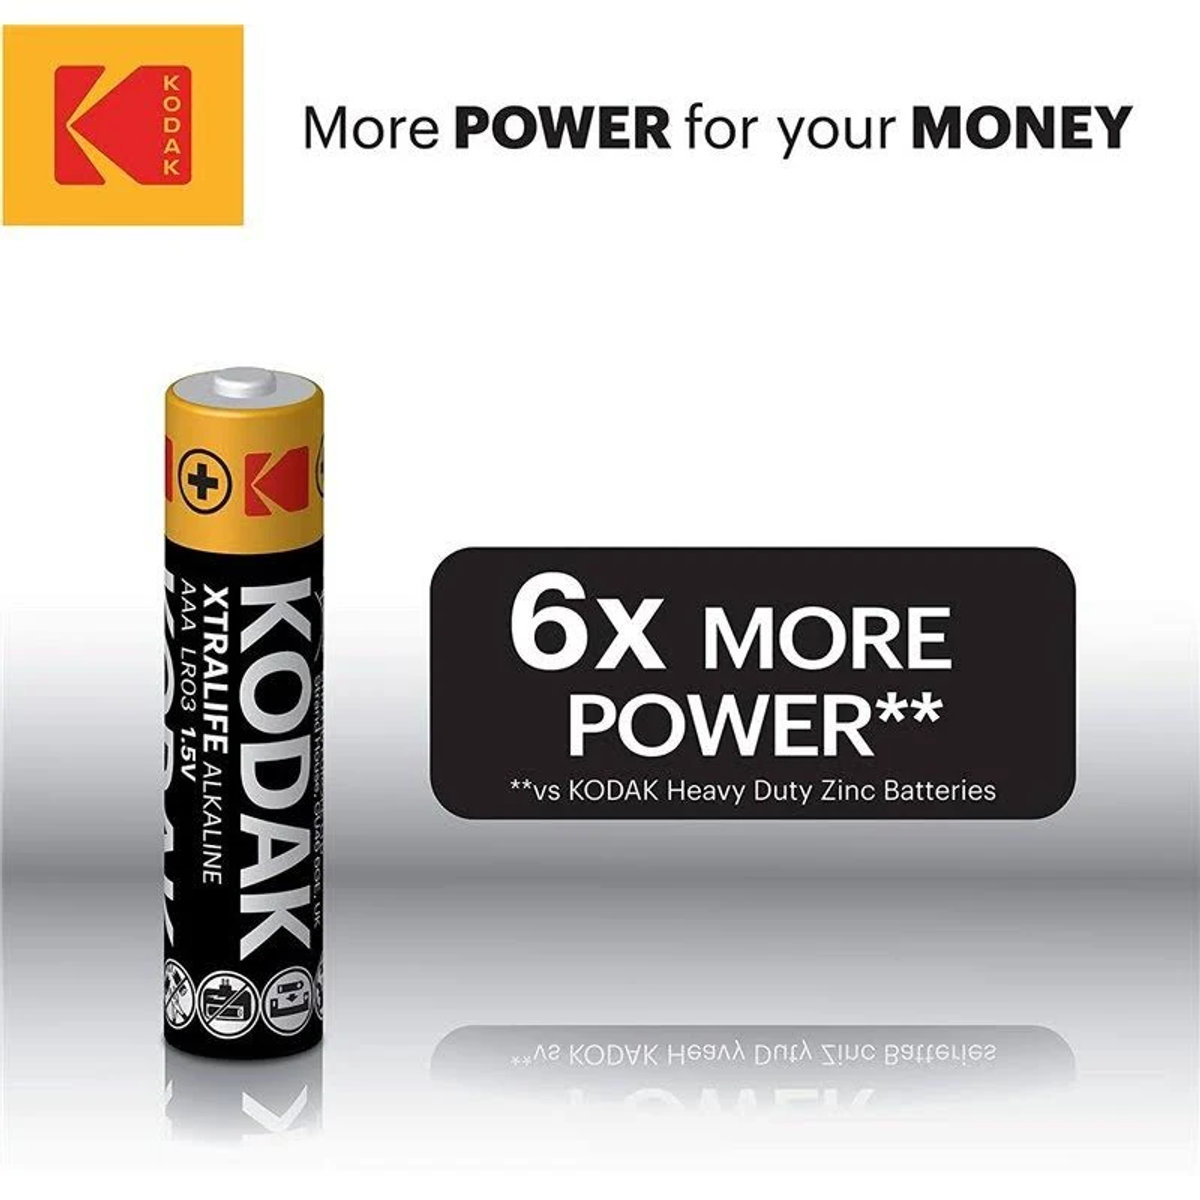 KODAK Batterien 30422643 60 1.5 (enthalten). AAA Mehrzweckbatterien, erforderlich Volt